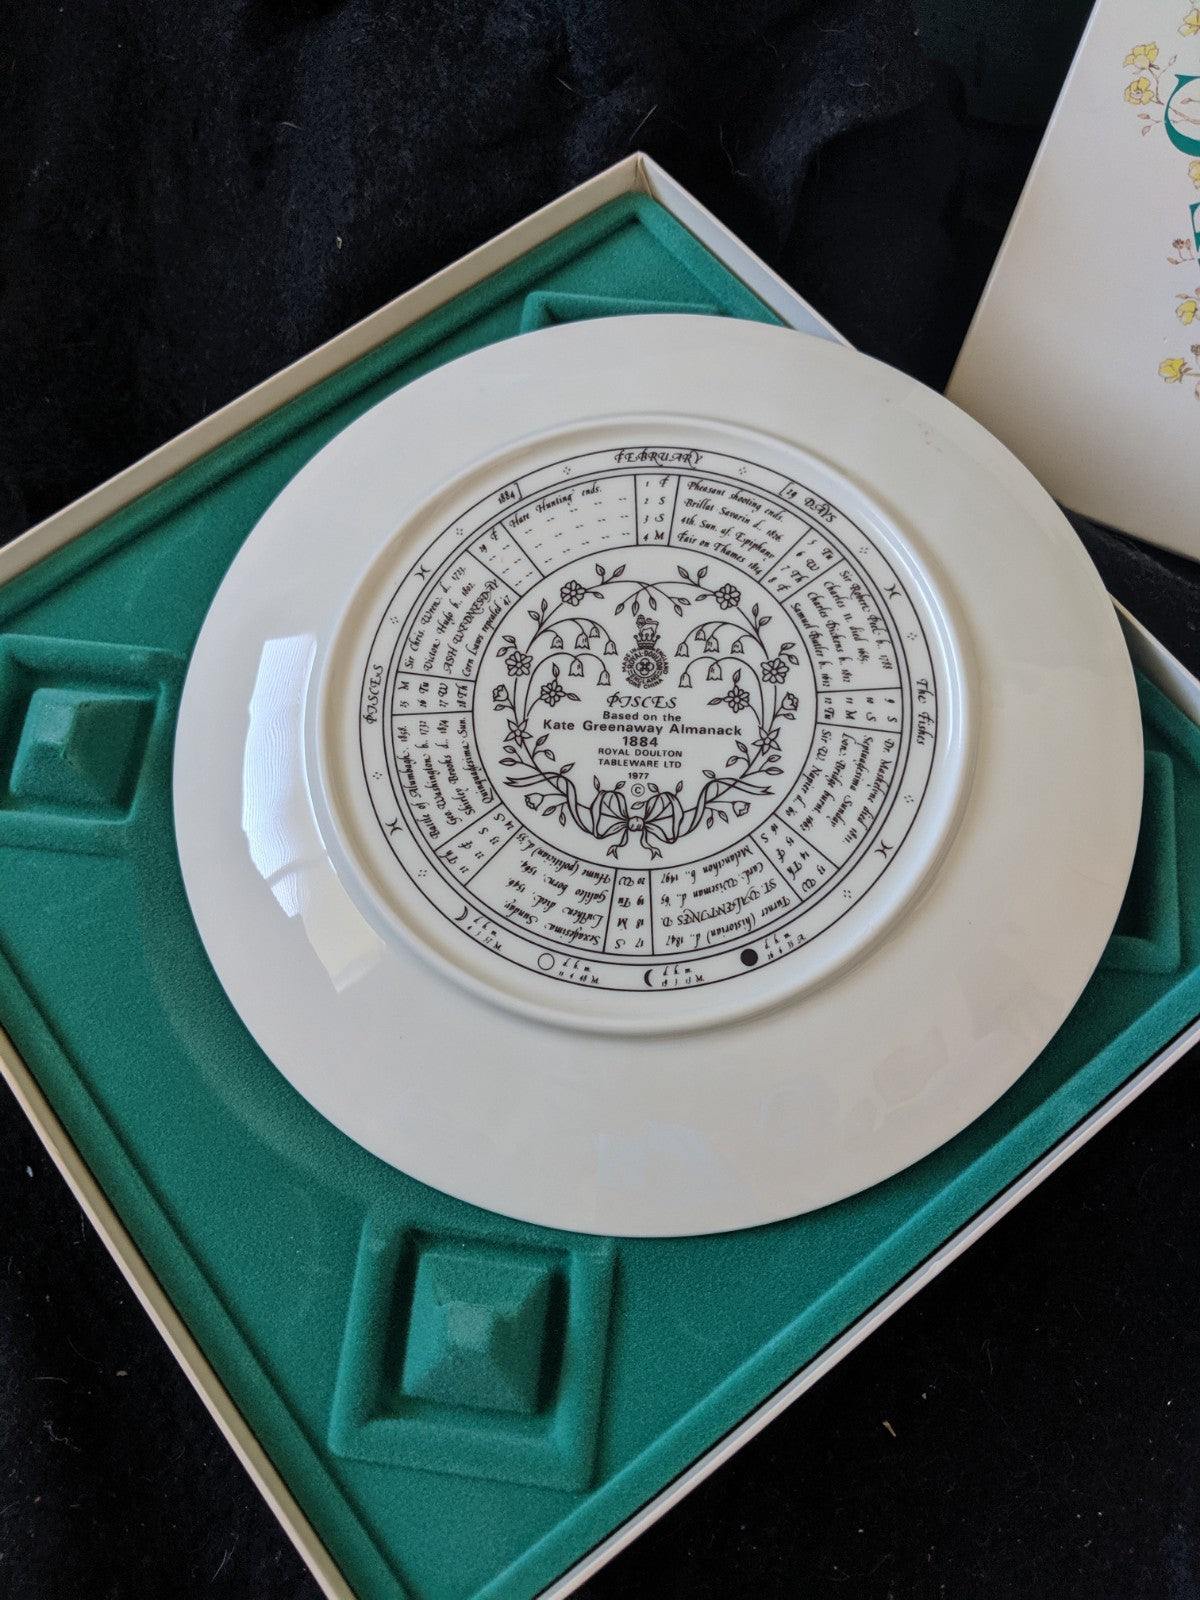 Kate Greenaway Almanack Plate by Royal Doulton -Pisces